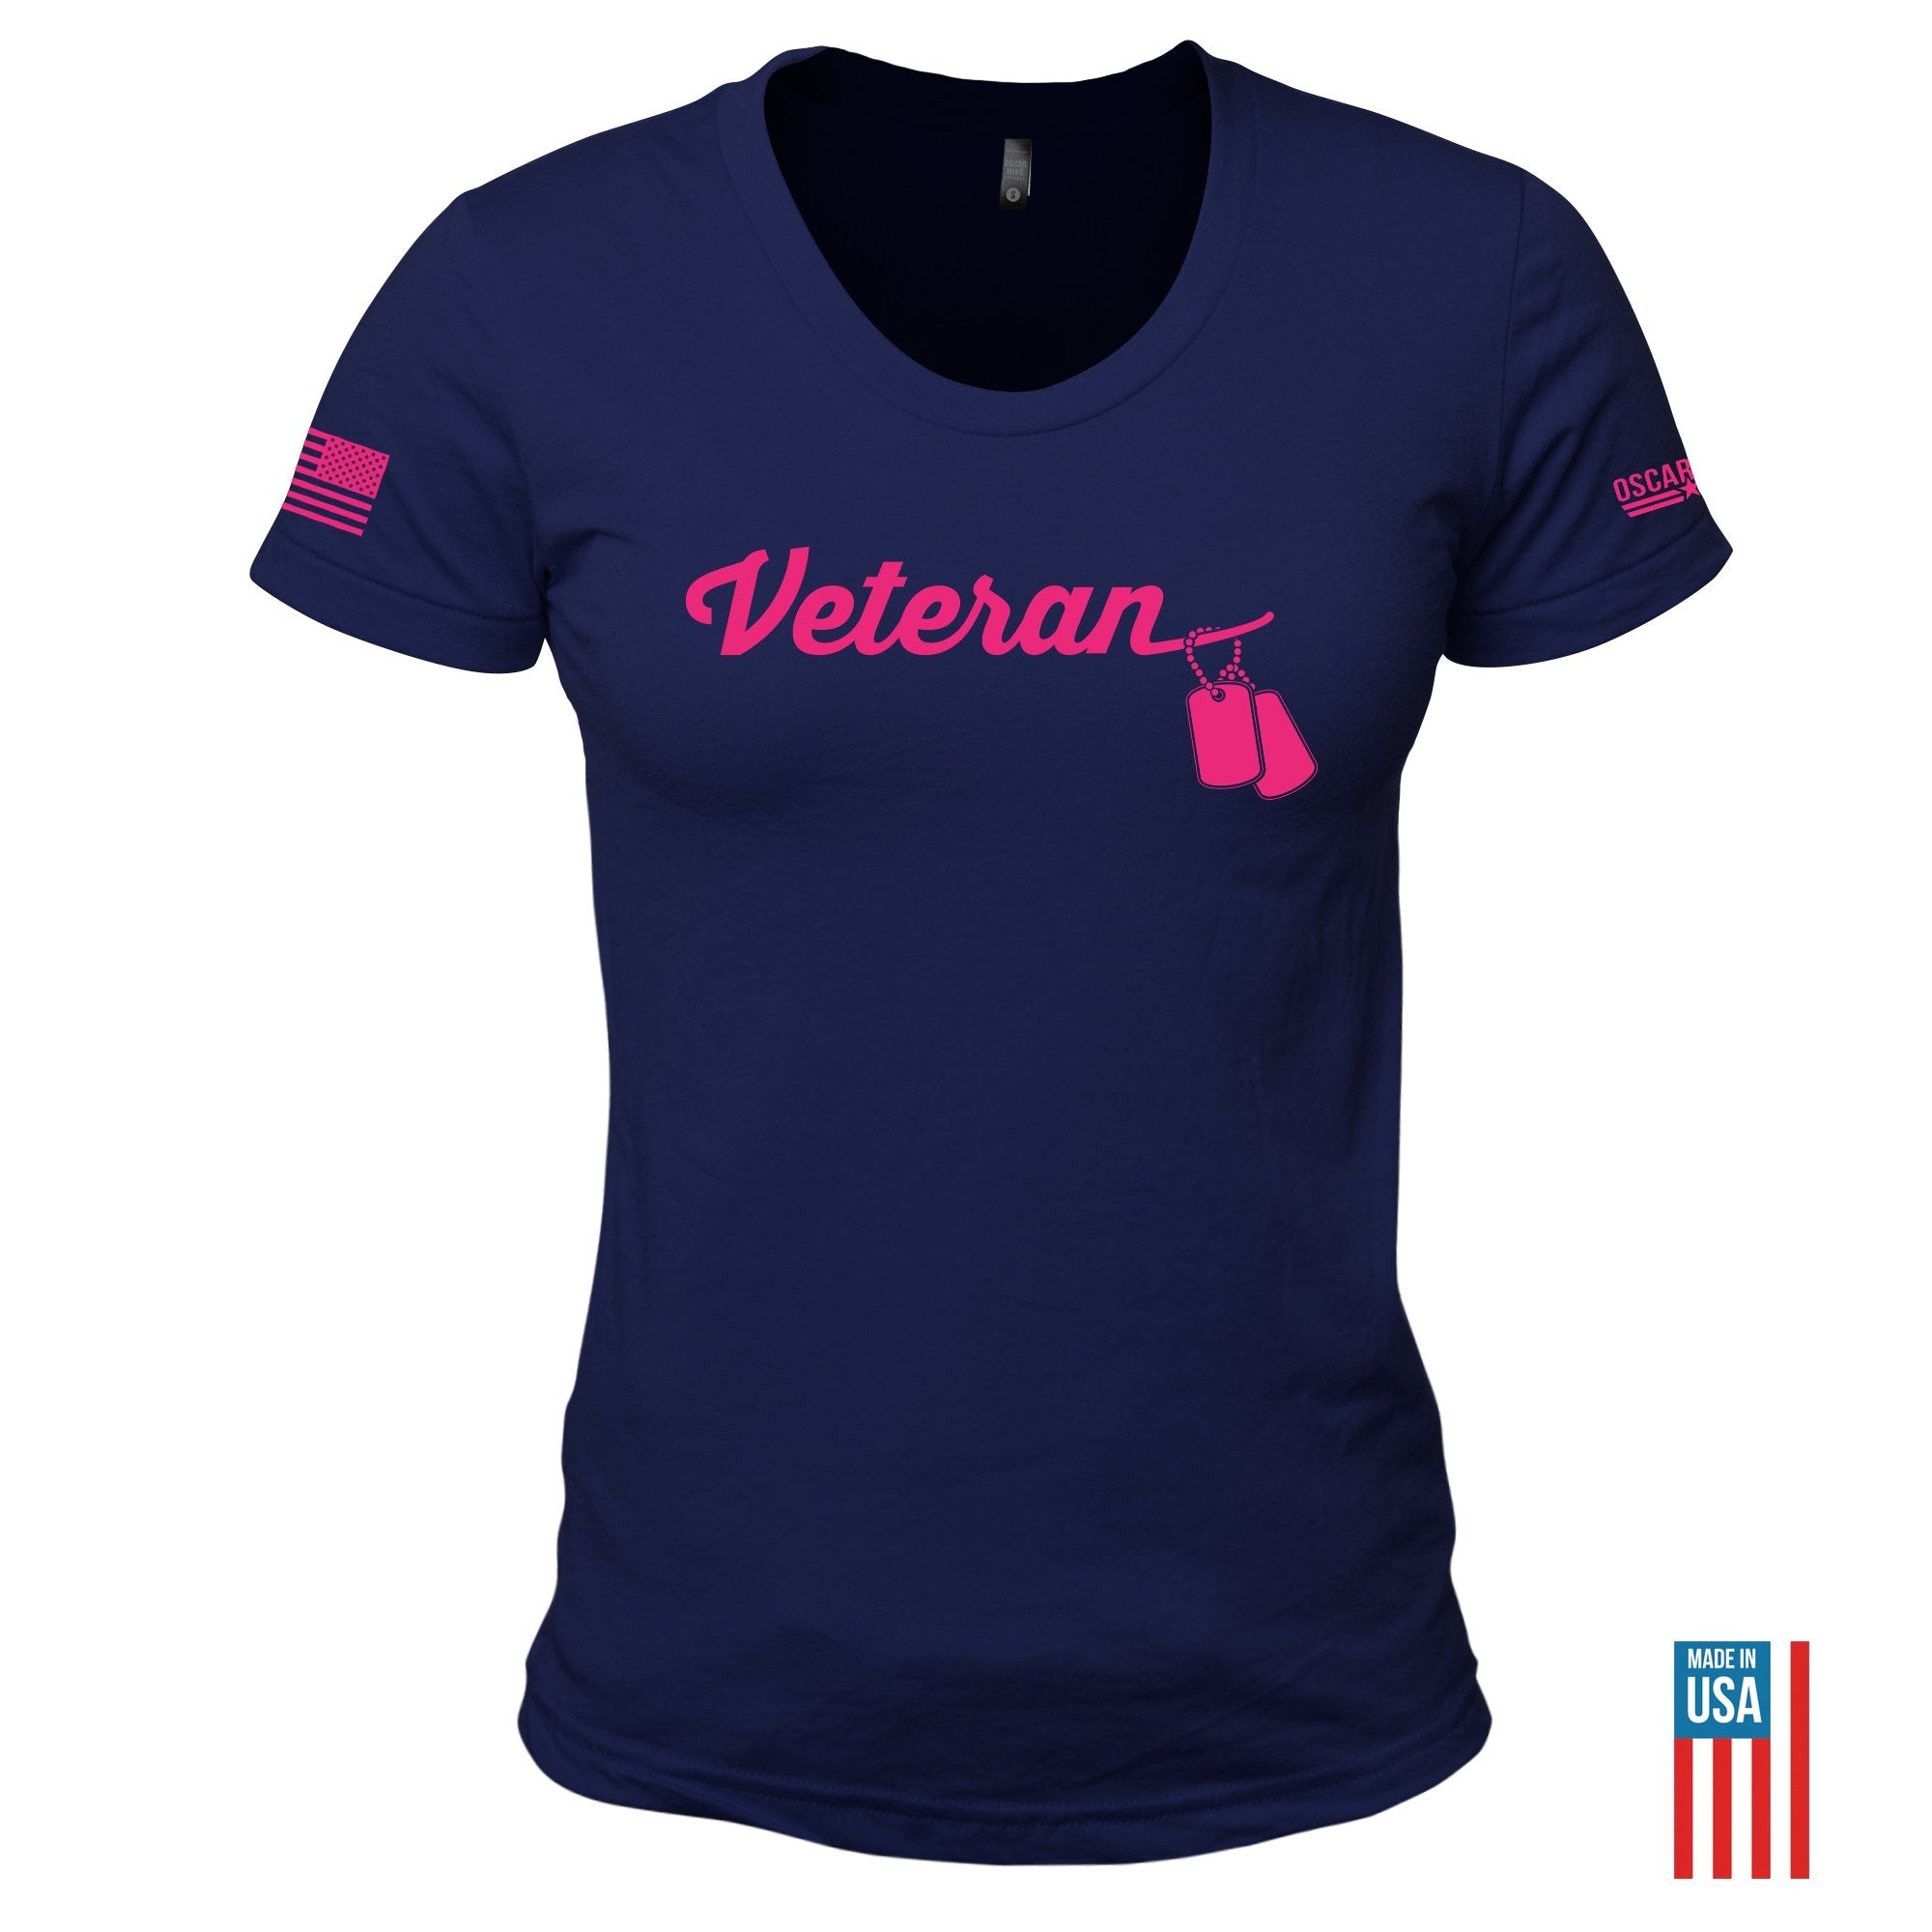 Women's Veteran Dog Tags T-Shirt from Oscar Mike Apparel